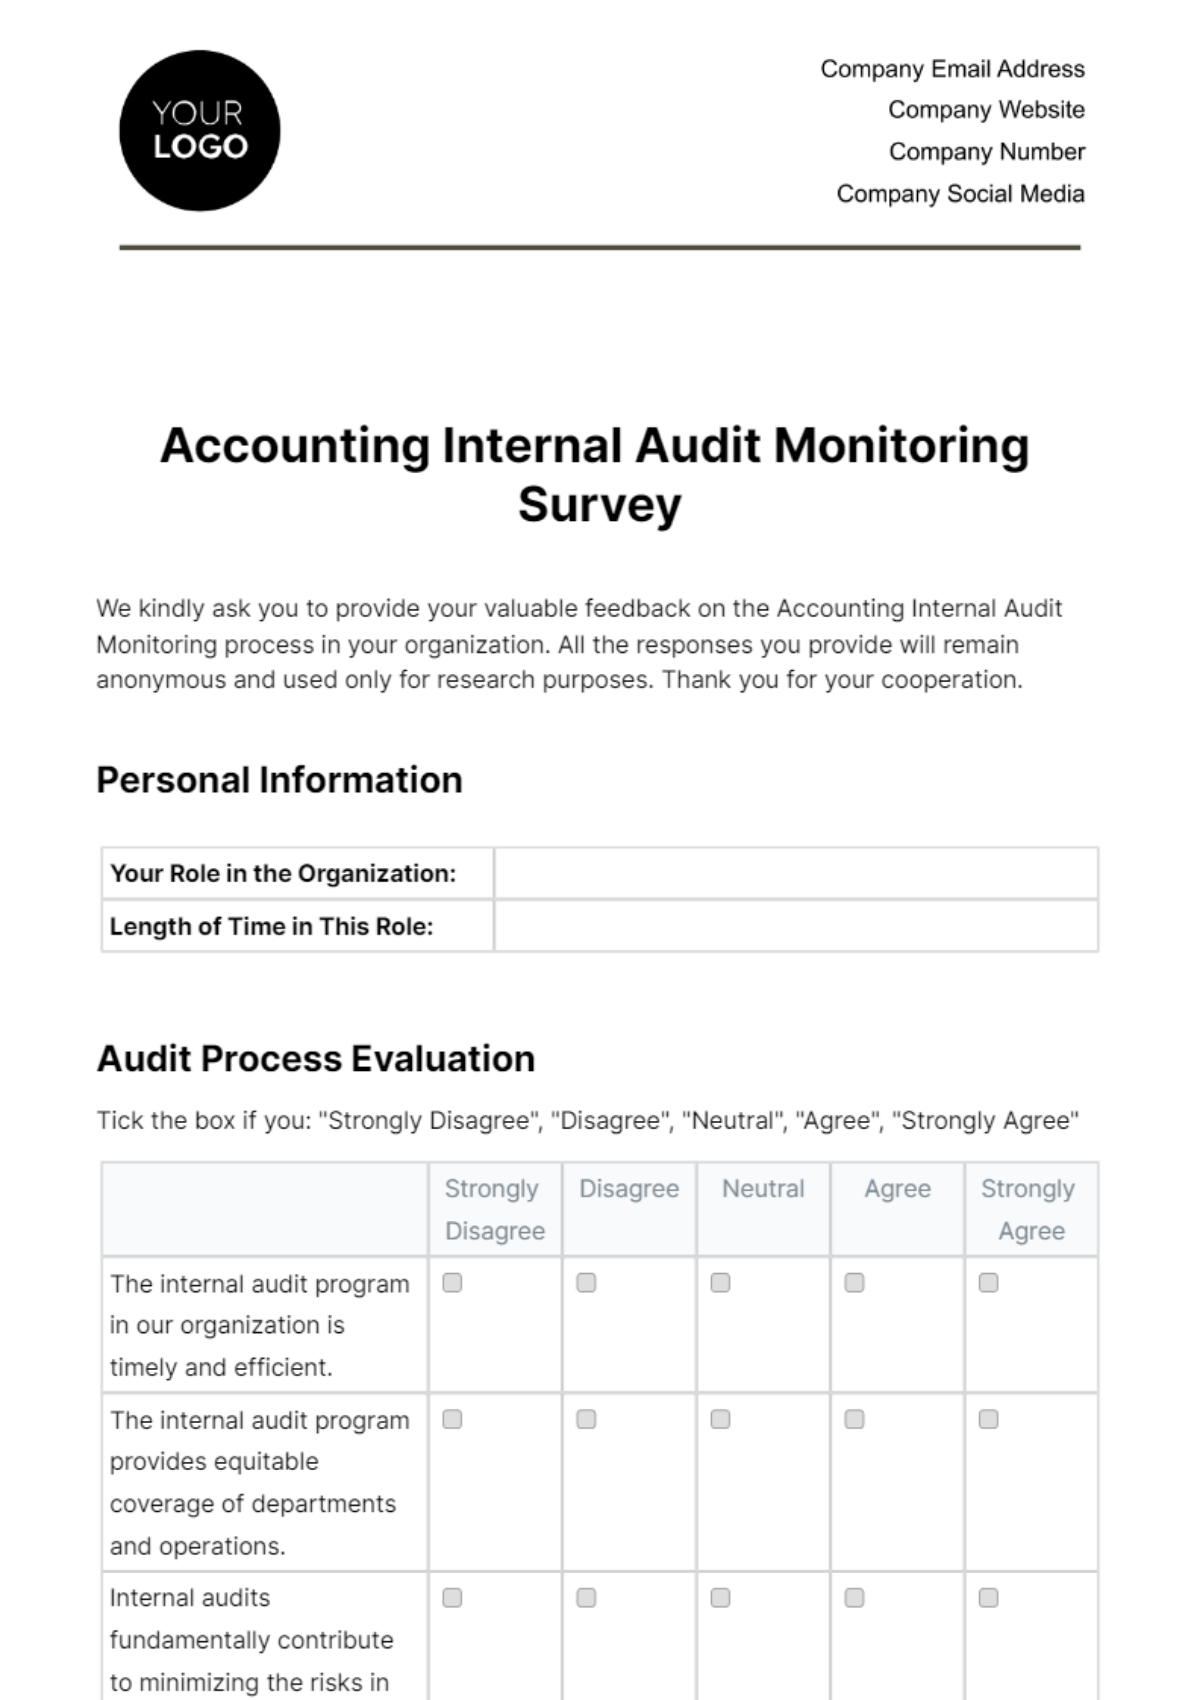 Free Accounting Internal Audit Monitoring Survey Template